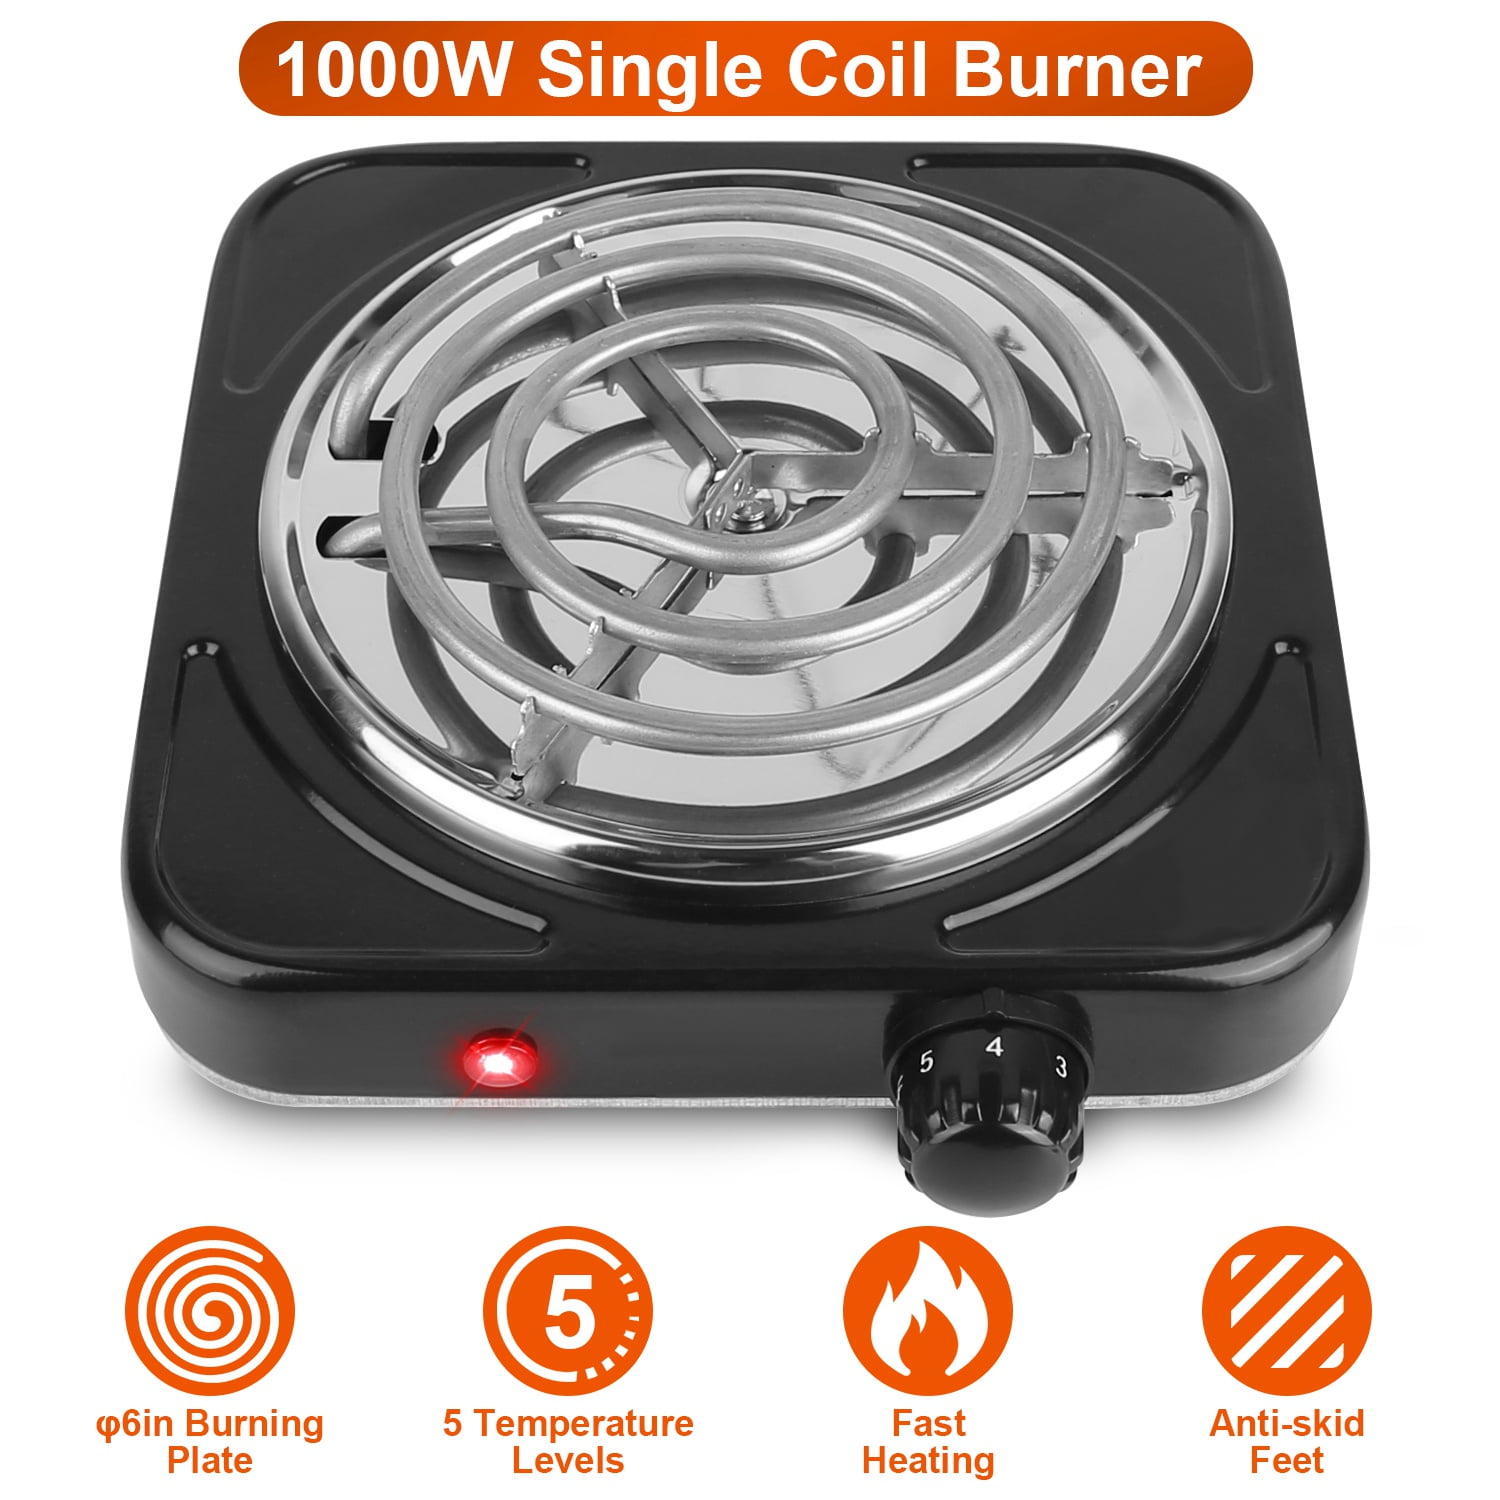 Ovente Electric Single Coil Burner, 1000W (120V), 6-Inch Plate, Adjustable  Temperature Control, Metal Housing, Indicator Light, Non-Slip Rubber Feet